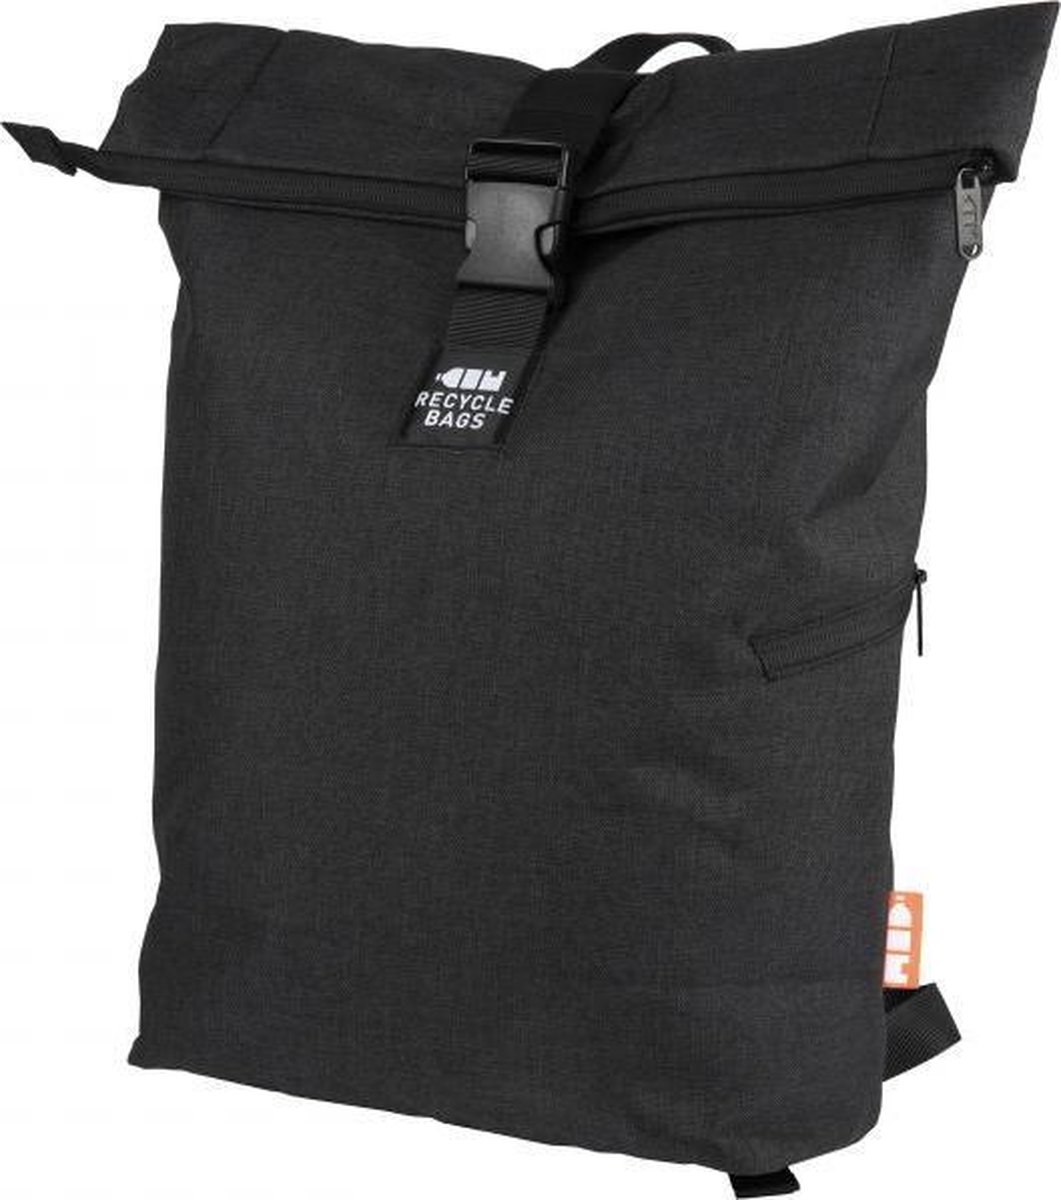 Overige Merken Rb Backpack 100% Gerecycled Pet- Gerecyclede Rugzak - Zwart